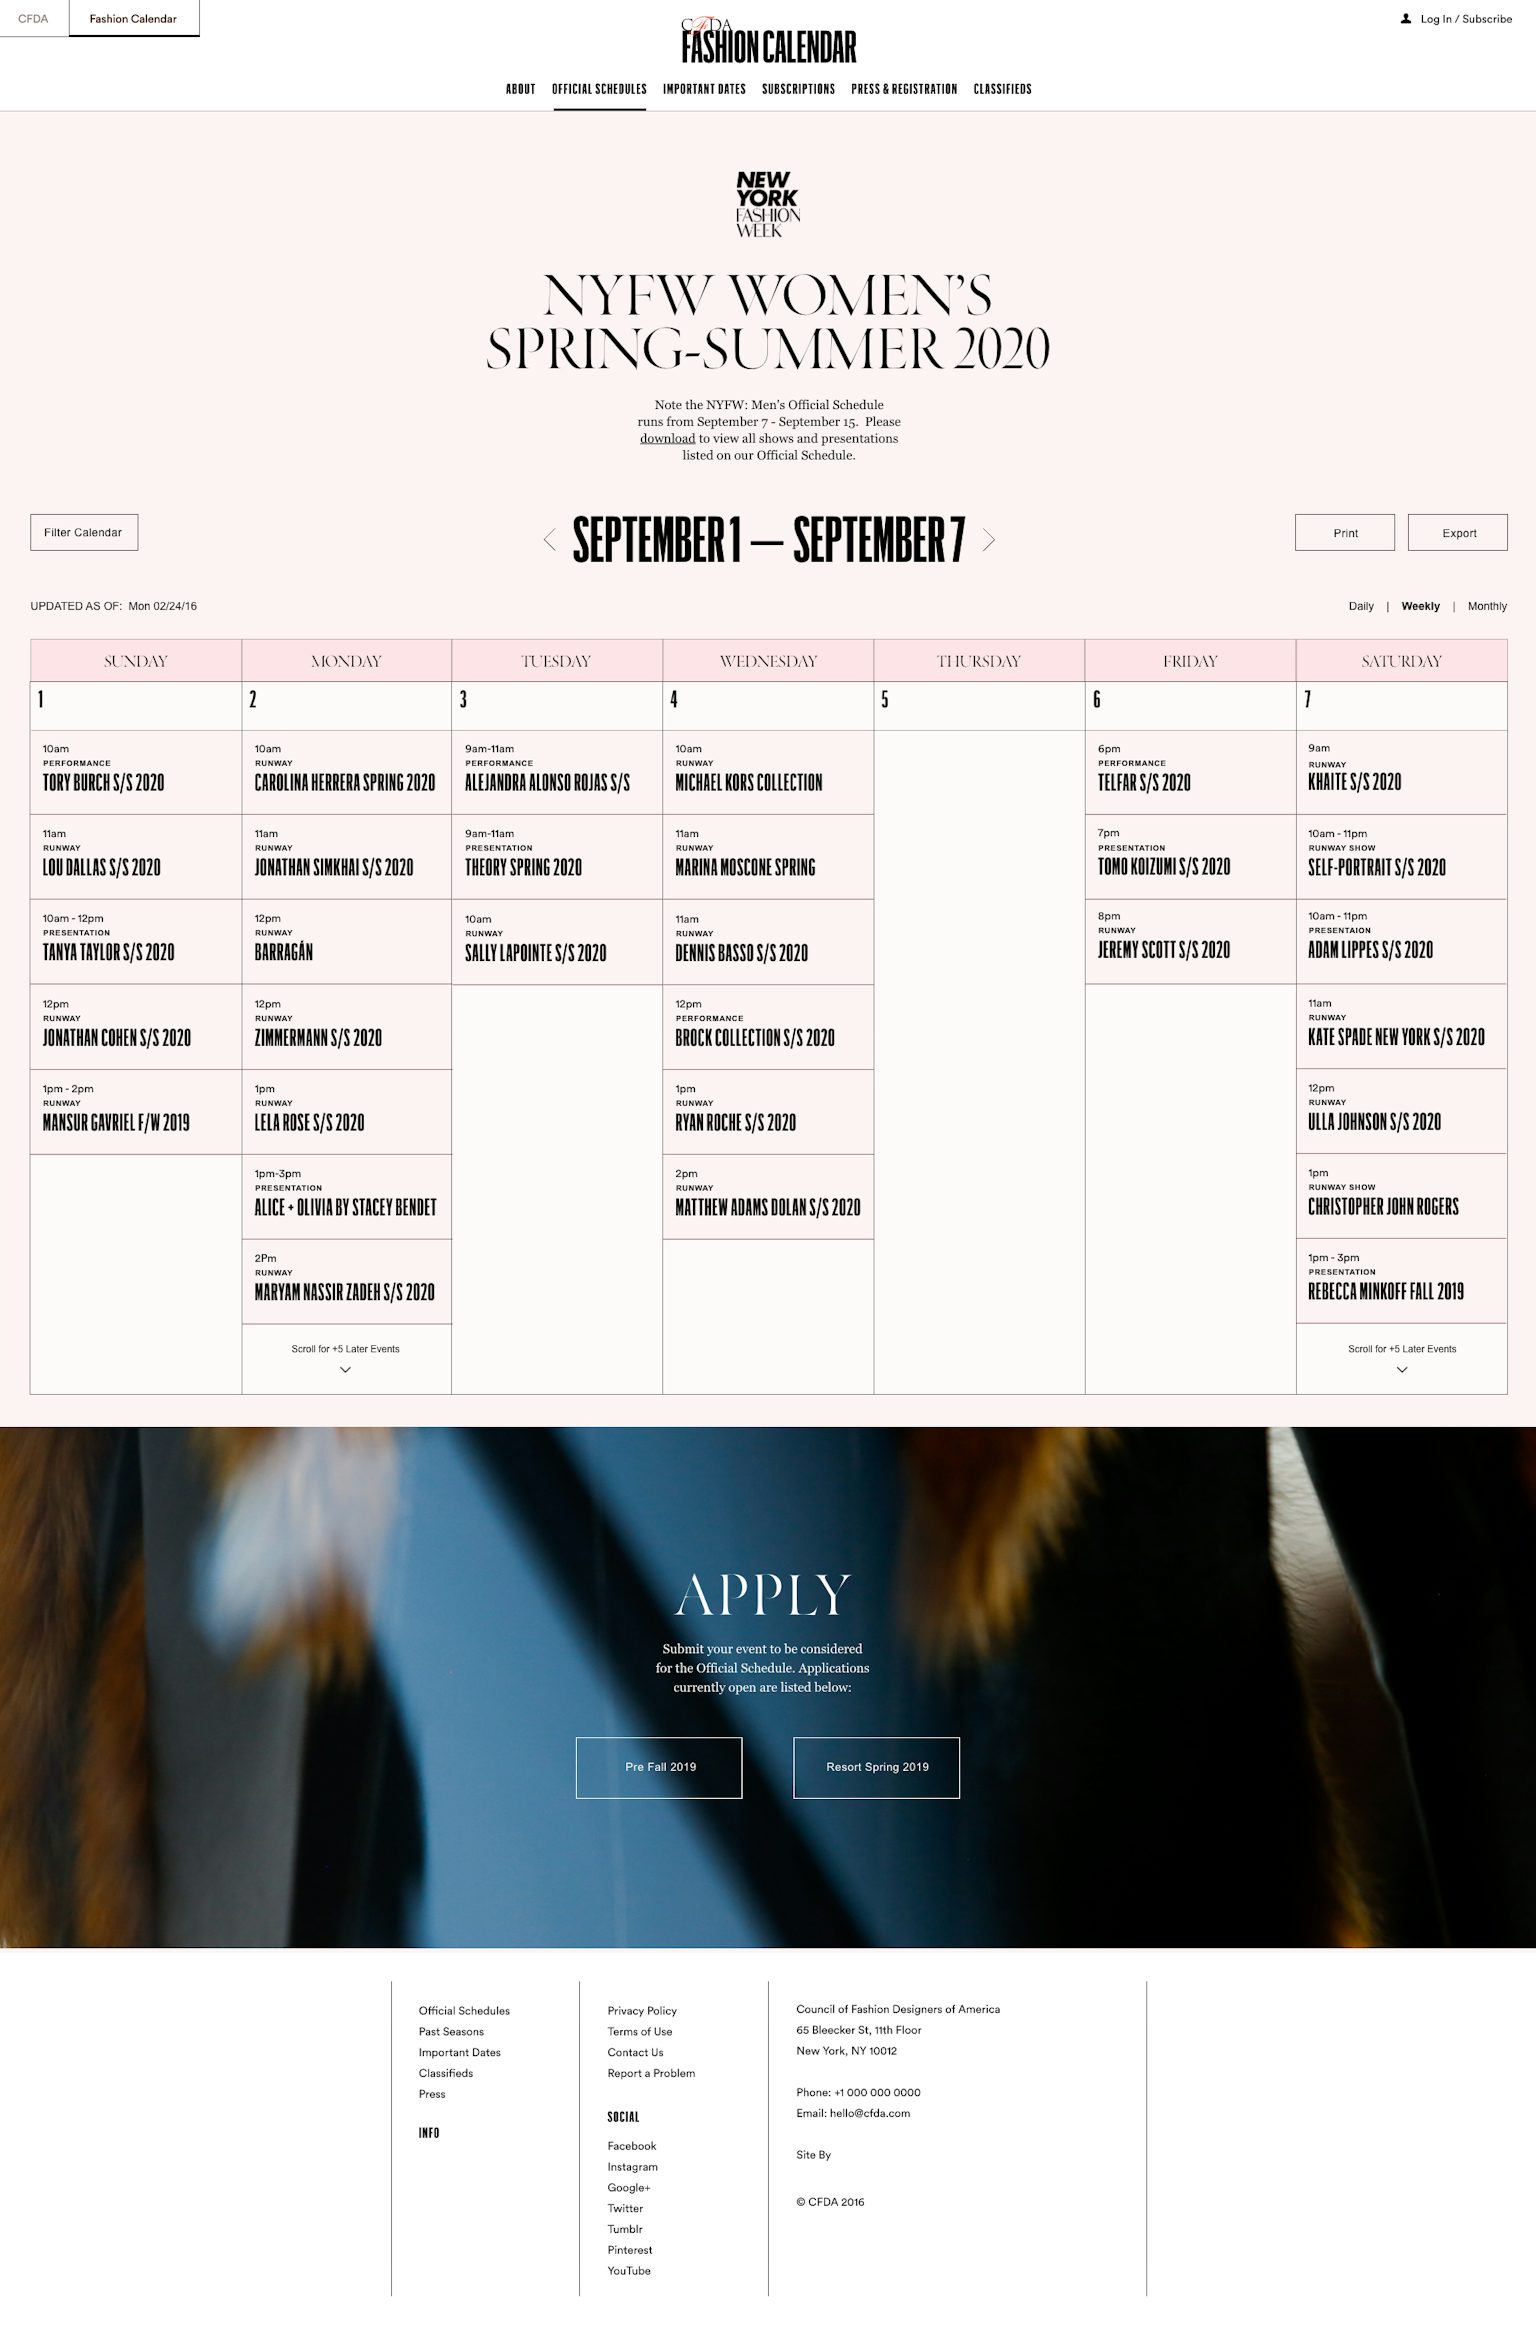 CFDA & Fashion Calendar Editorial Website Design & Development by Hugo